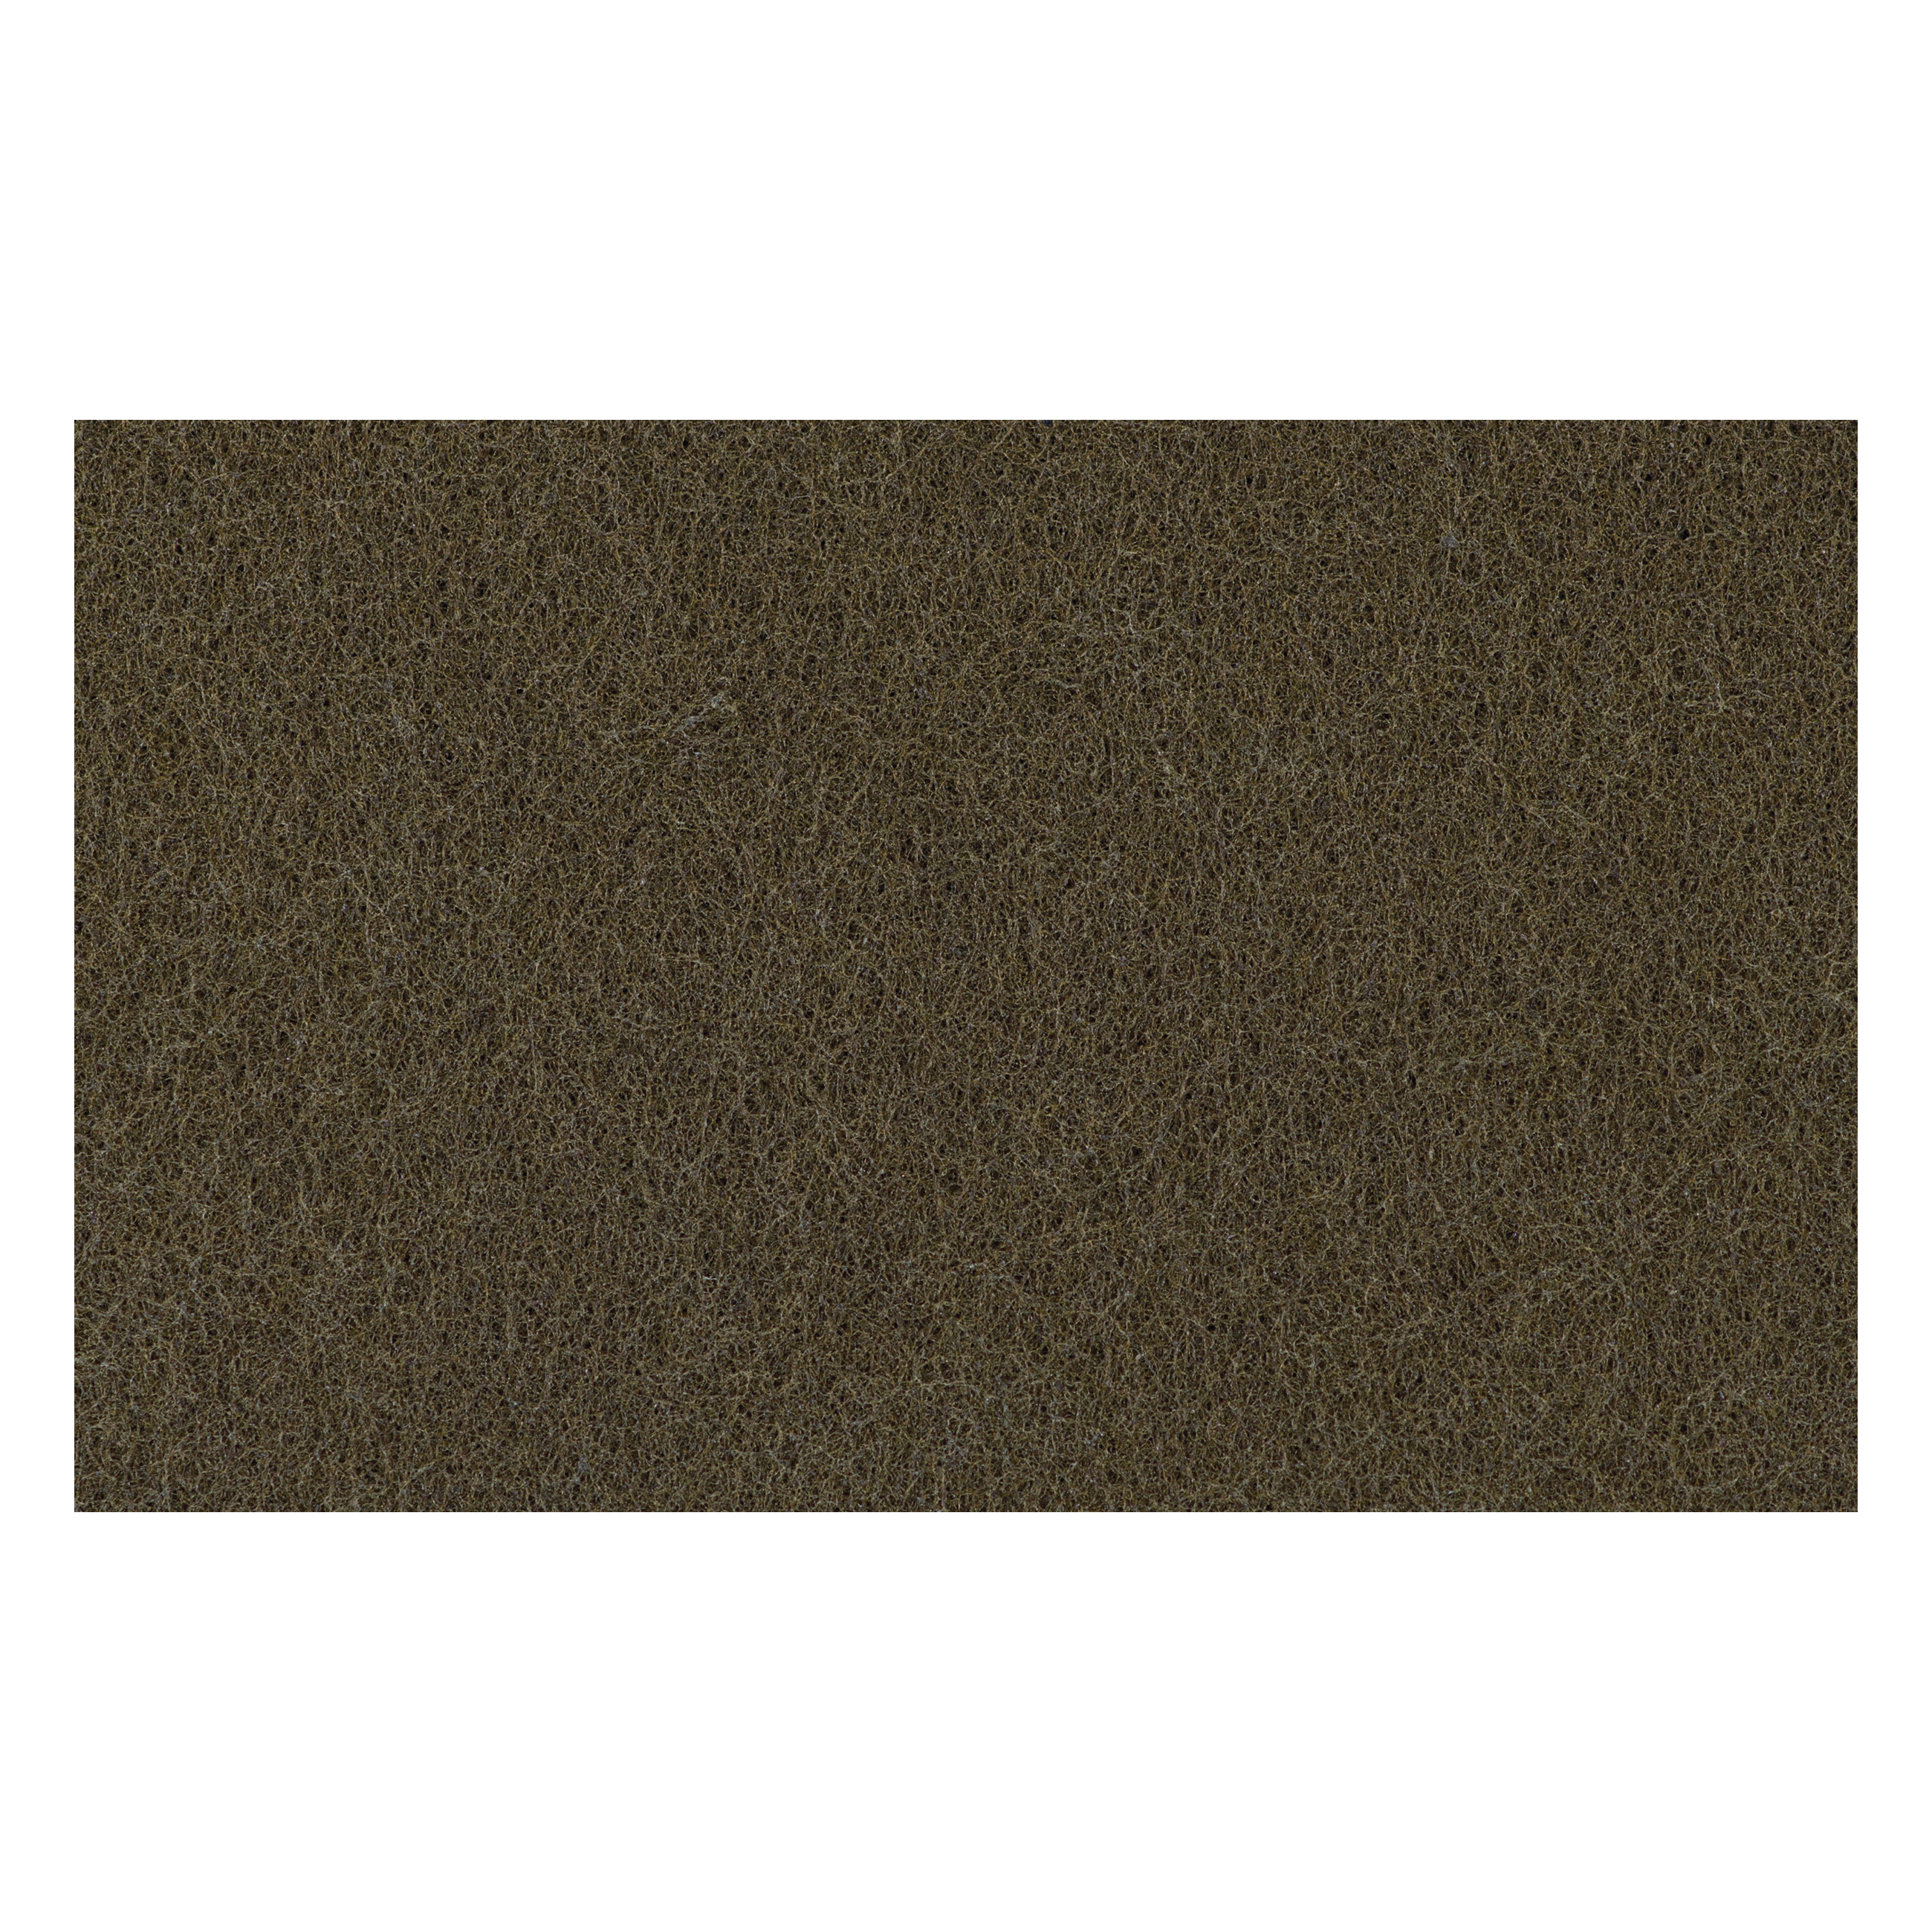 Scotch-Brite™ 048011-14046 CP-SH Waterproof Non-Woven Sanding Sheet, 9 in L x 6 in W, Very Fine Grade, Aluminum Oxide Abrasive